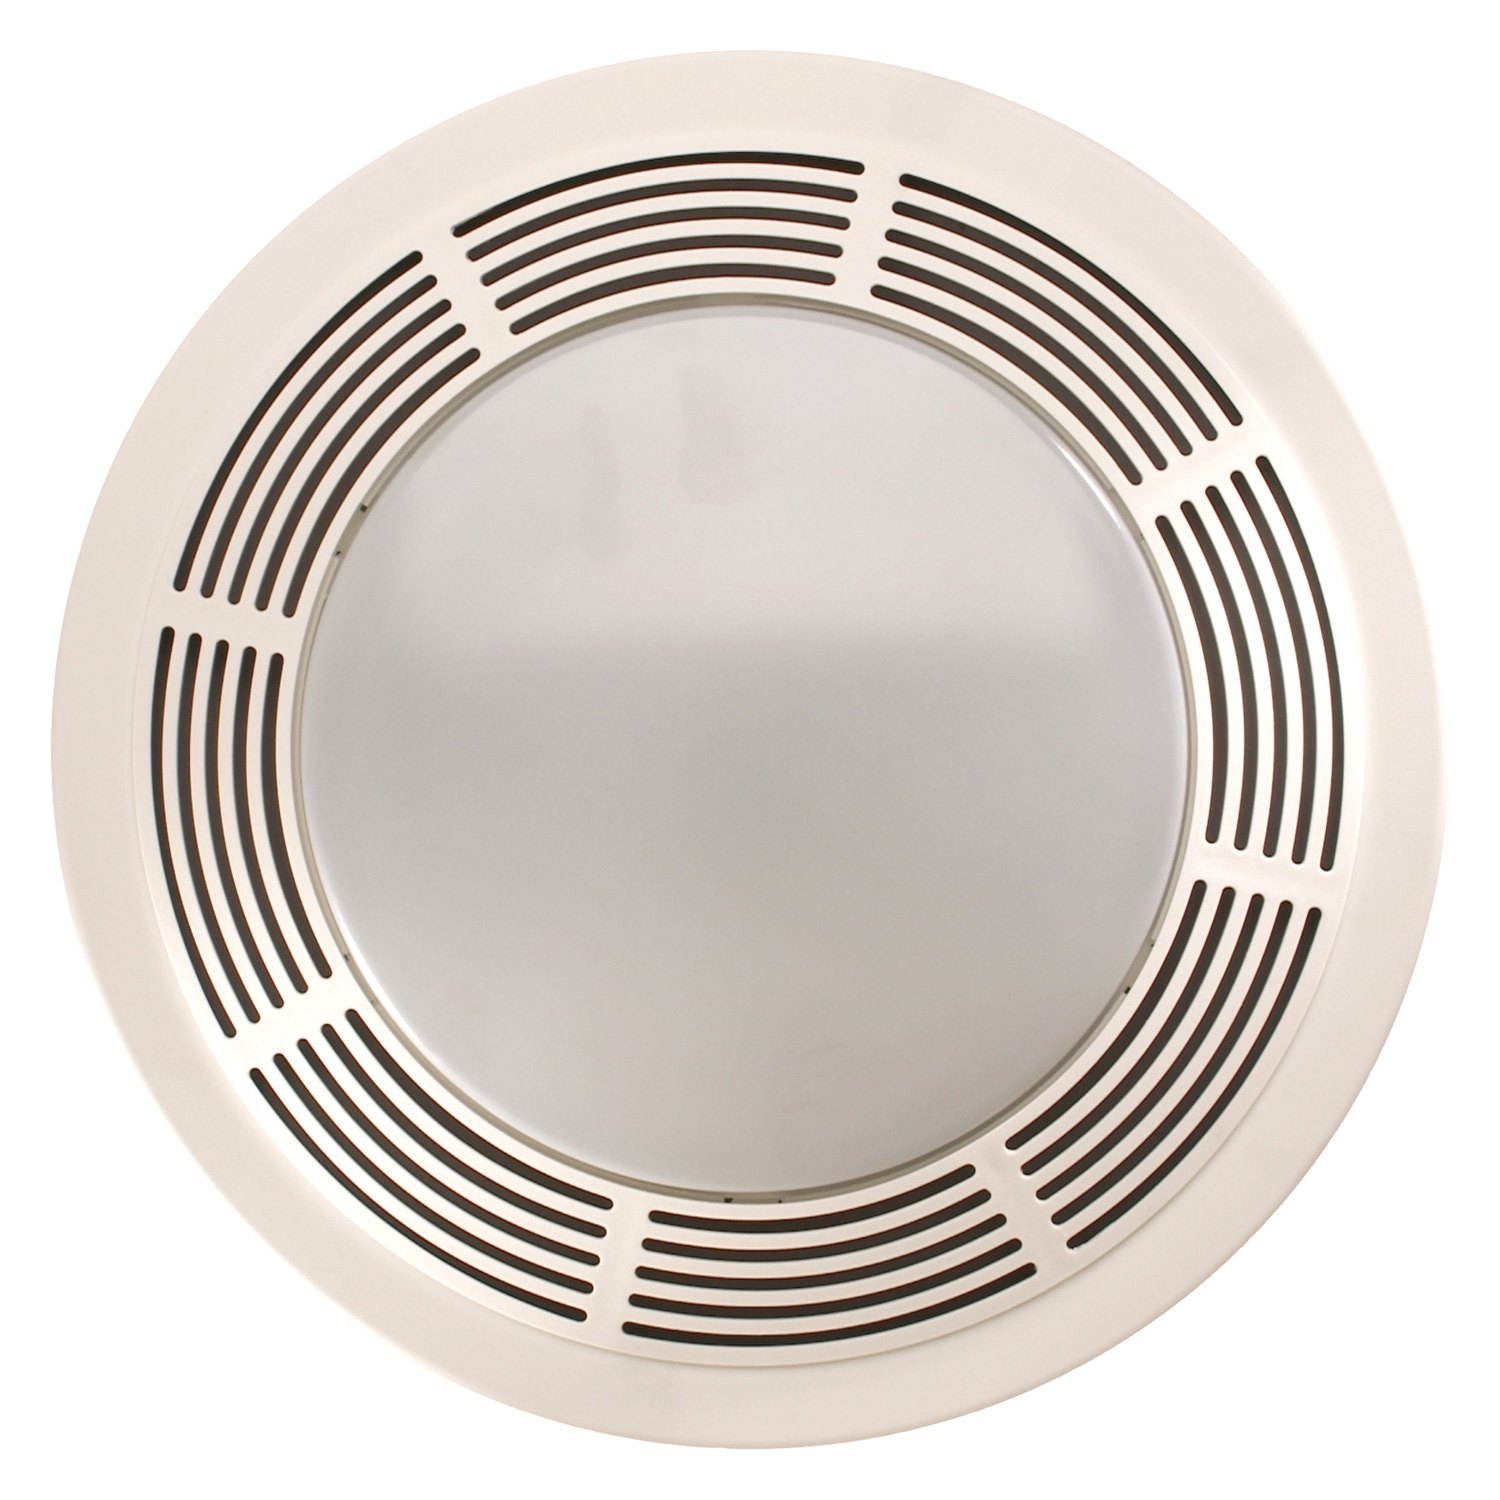 Broan Nutone® 8664rp Economy Series White 100 Cfm Ventilation Fan